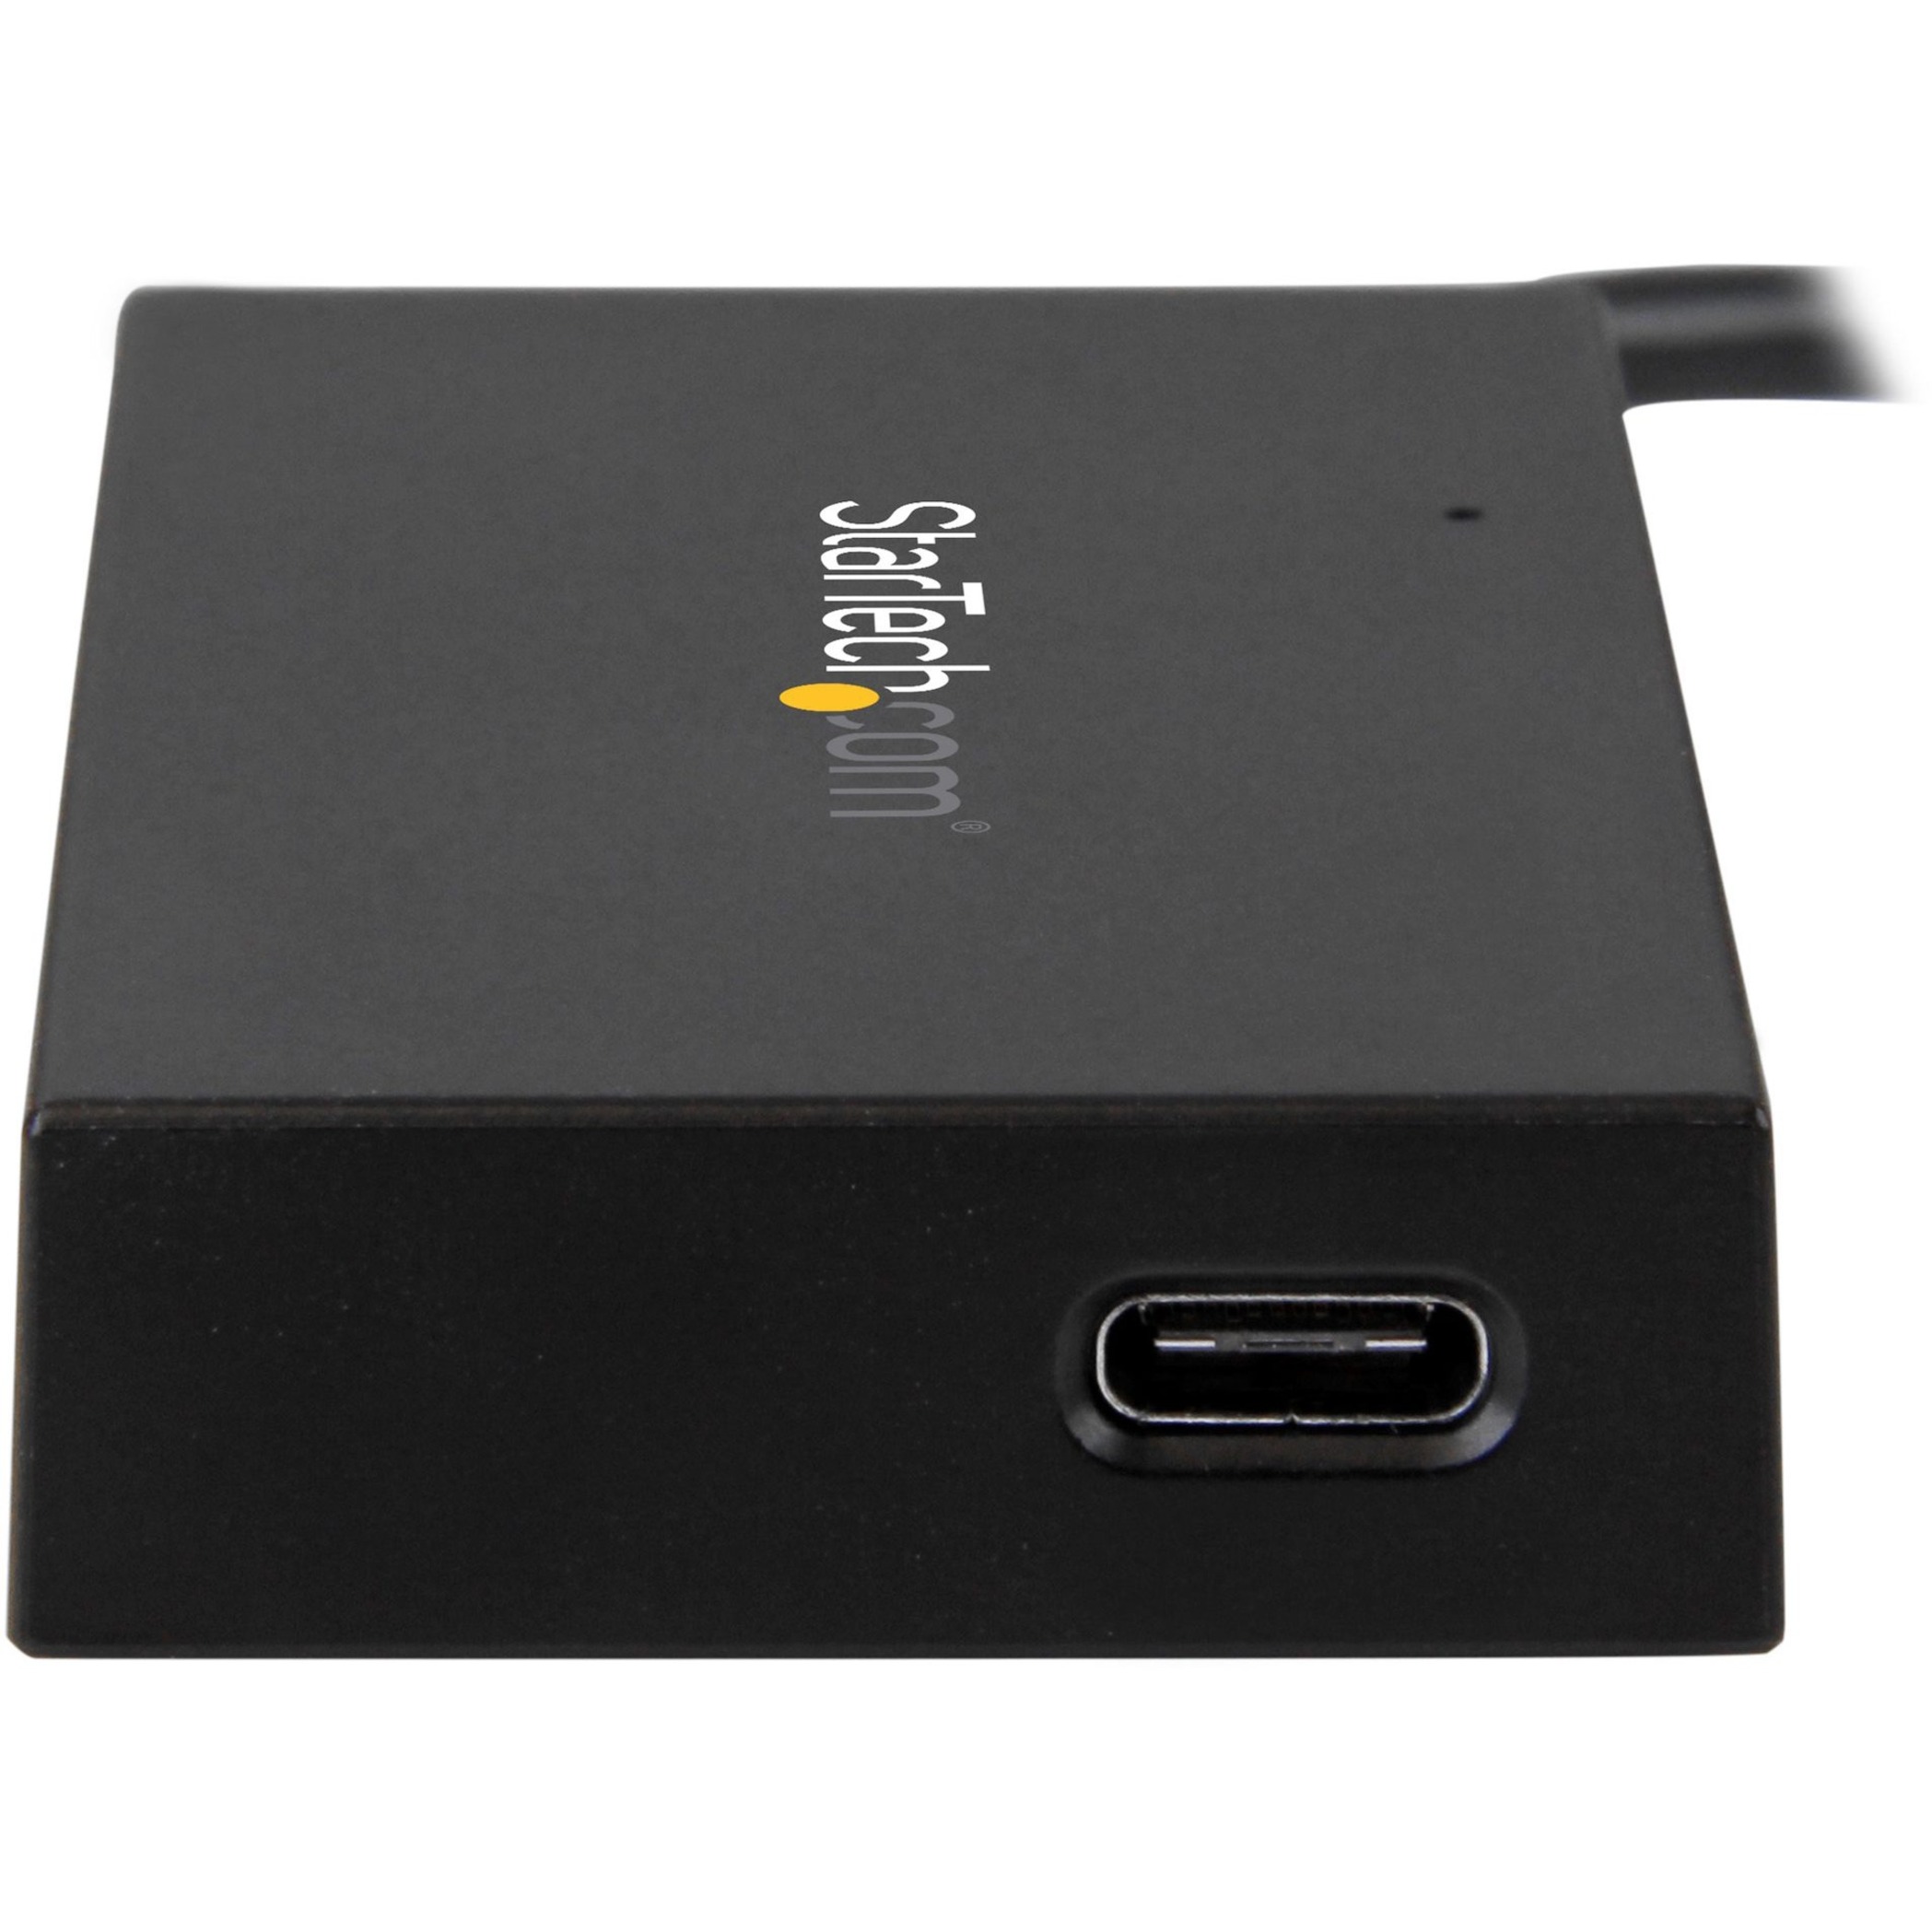 StarTech.com USB C Hub �����" 4 Port USB-C to USB-A (3x) and USB-C (1x) �����" with Power Adapter �����" USB Type C Hub �����" Port Expander - image 4 of 7